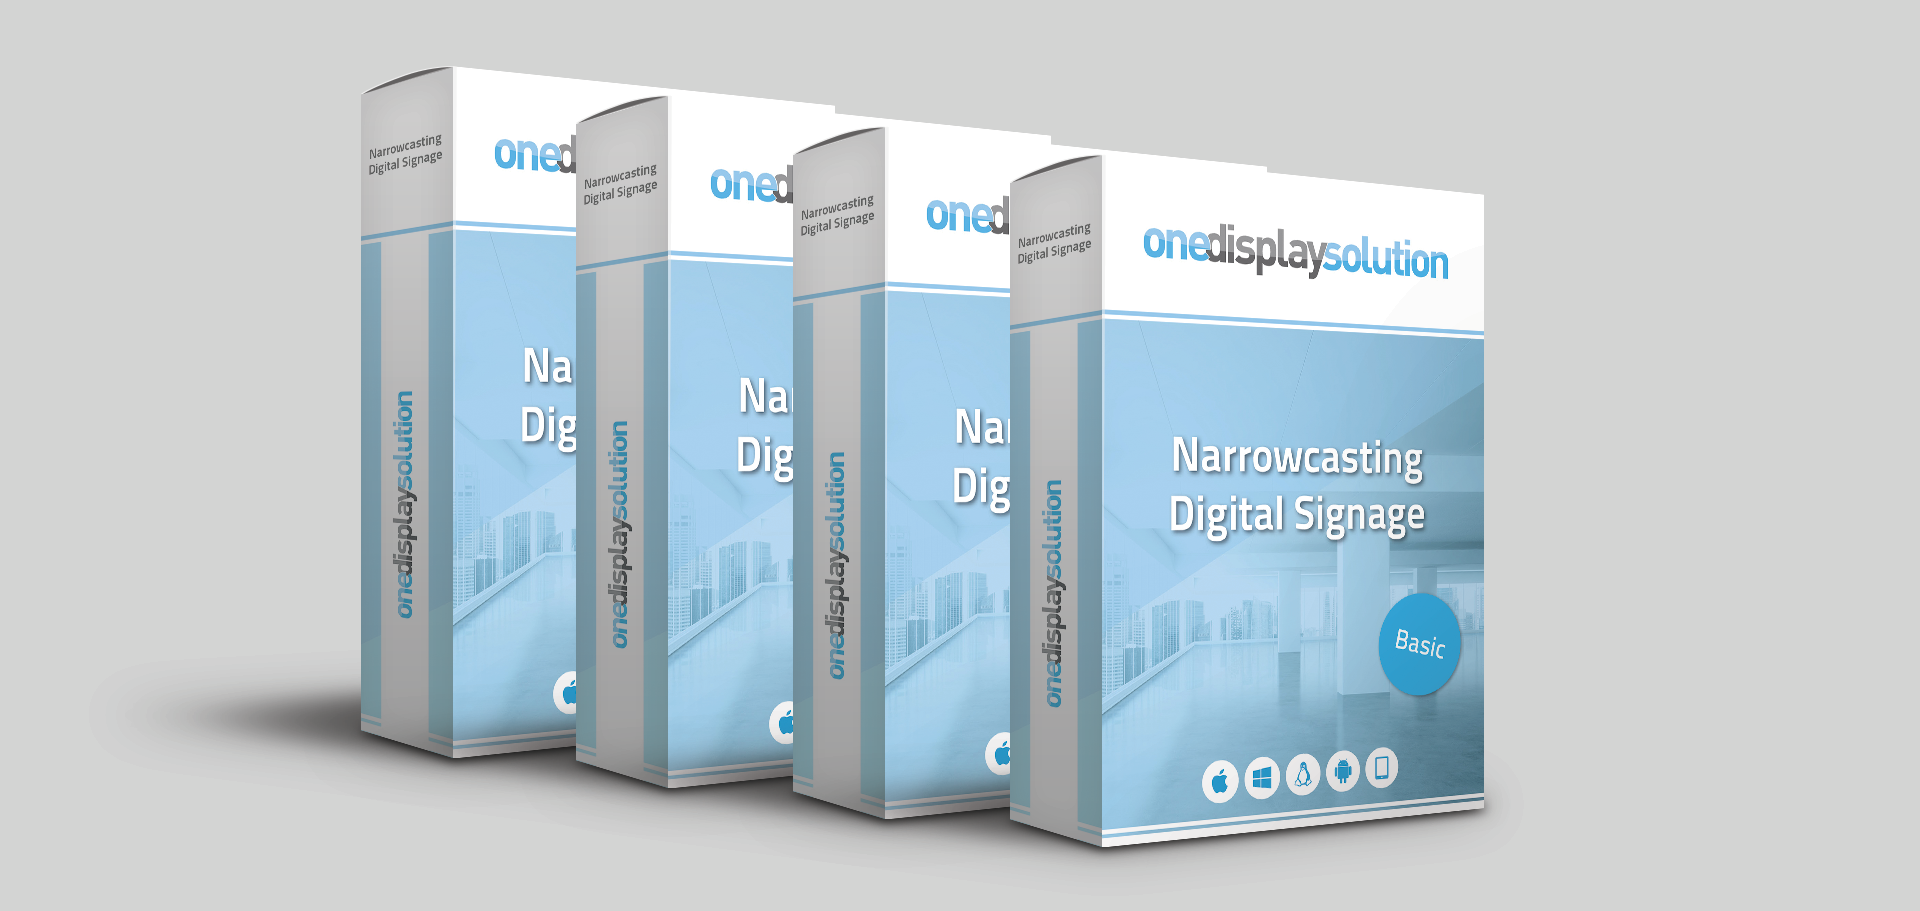 Narrowcasting-software-one-display-solution